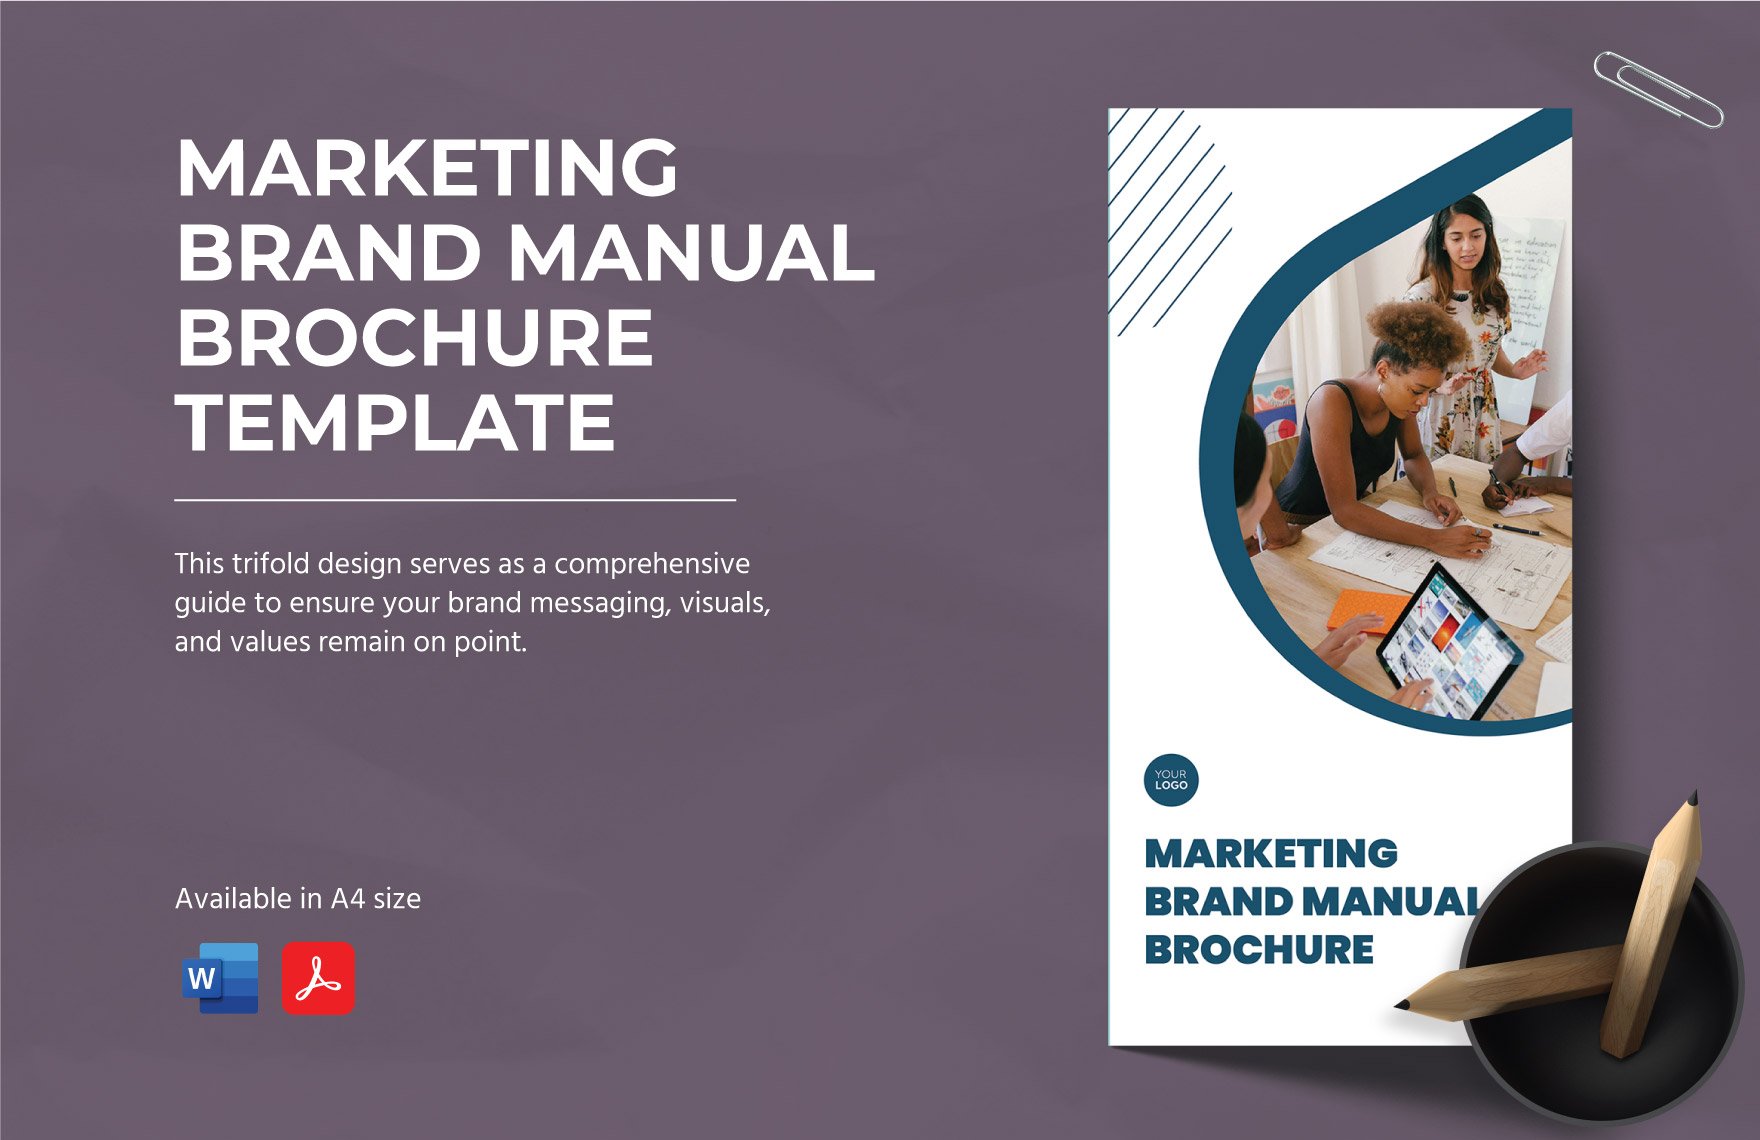 Marketing Brand Manual Brochure Template